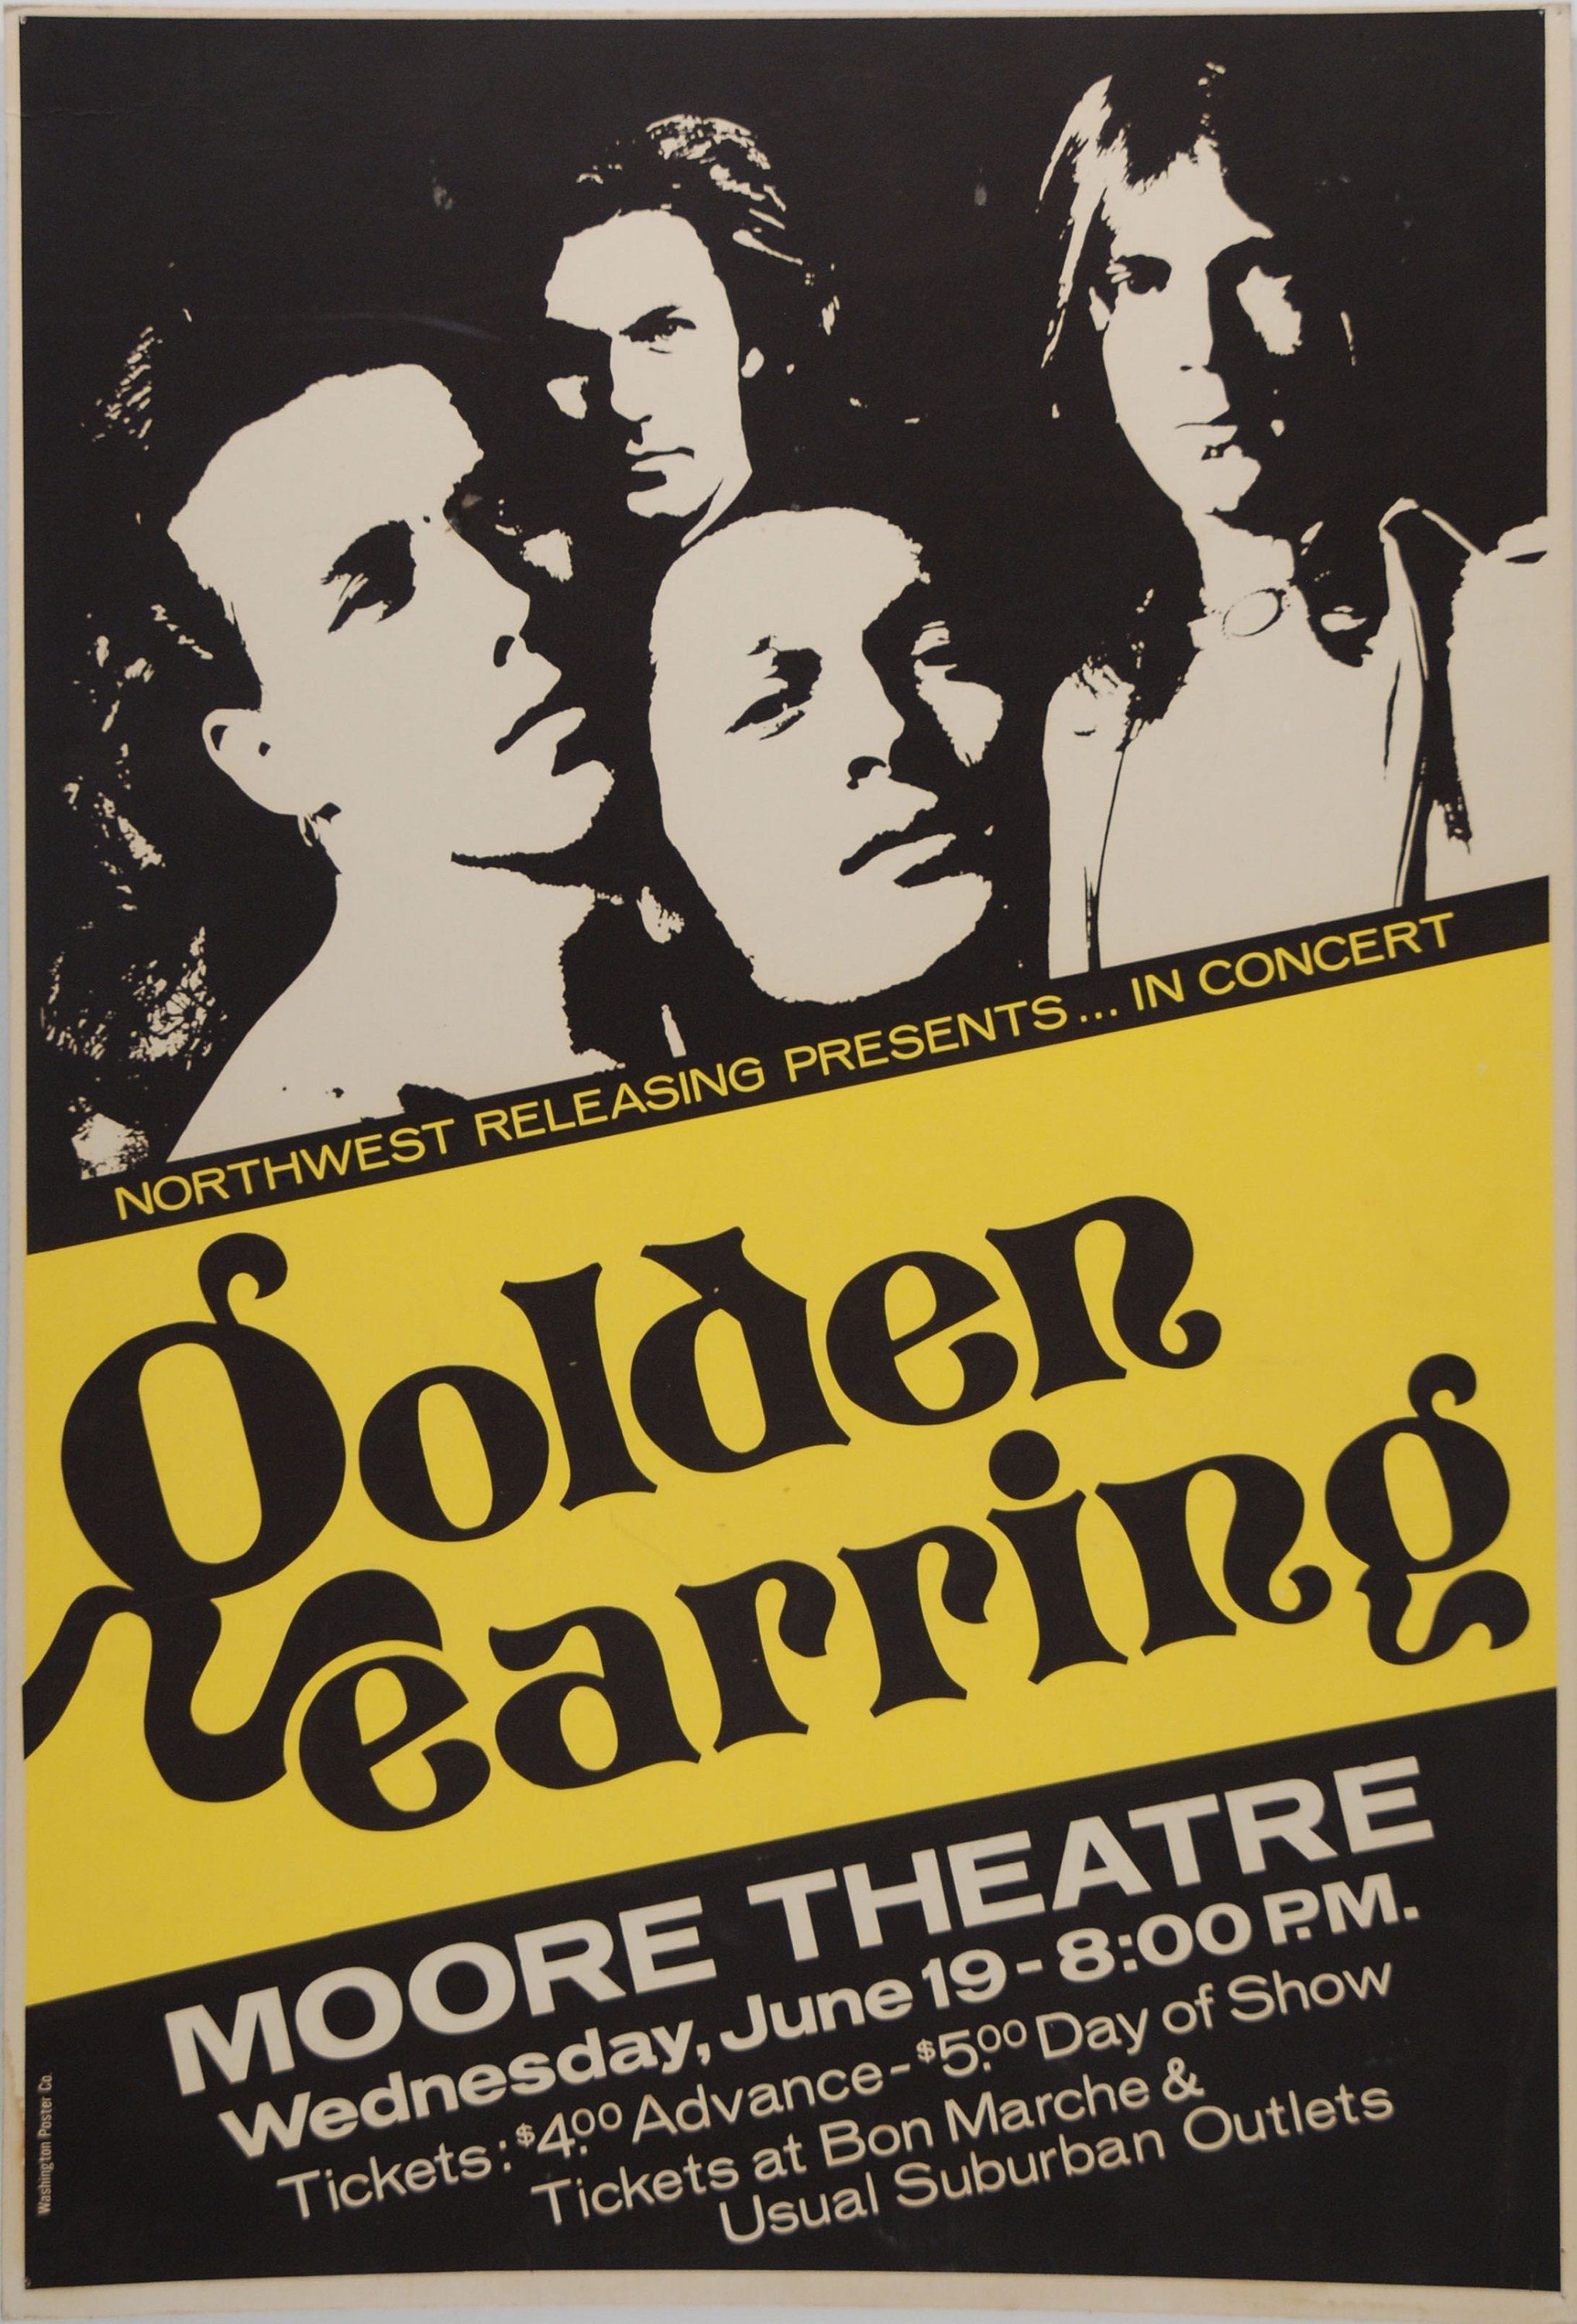 0790 Vintage Music Art Poster - Golden Earring Moore Theatre